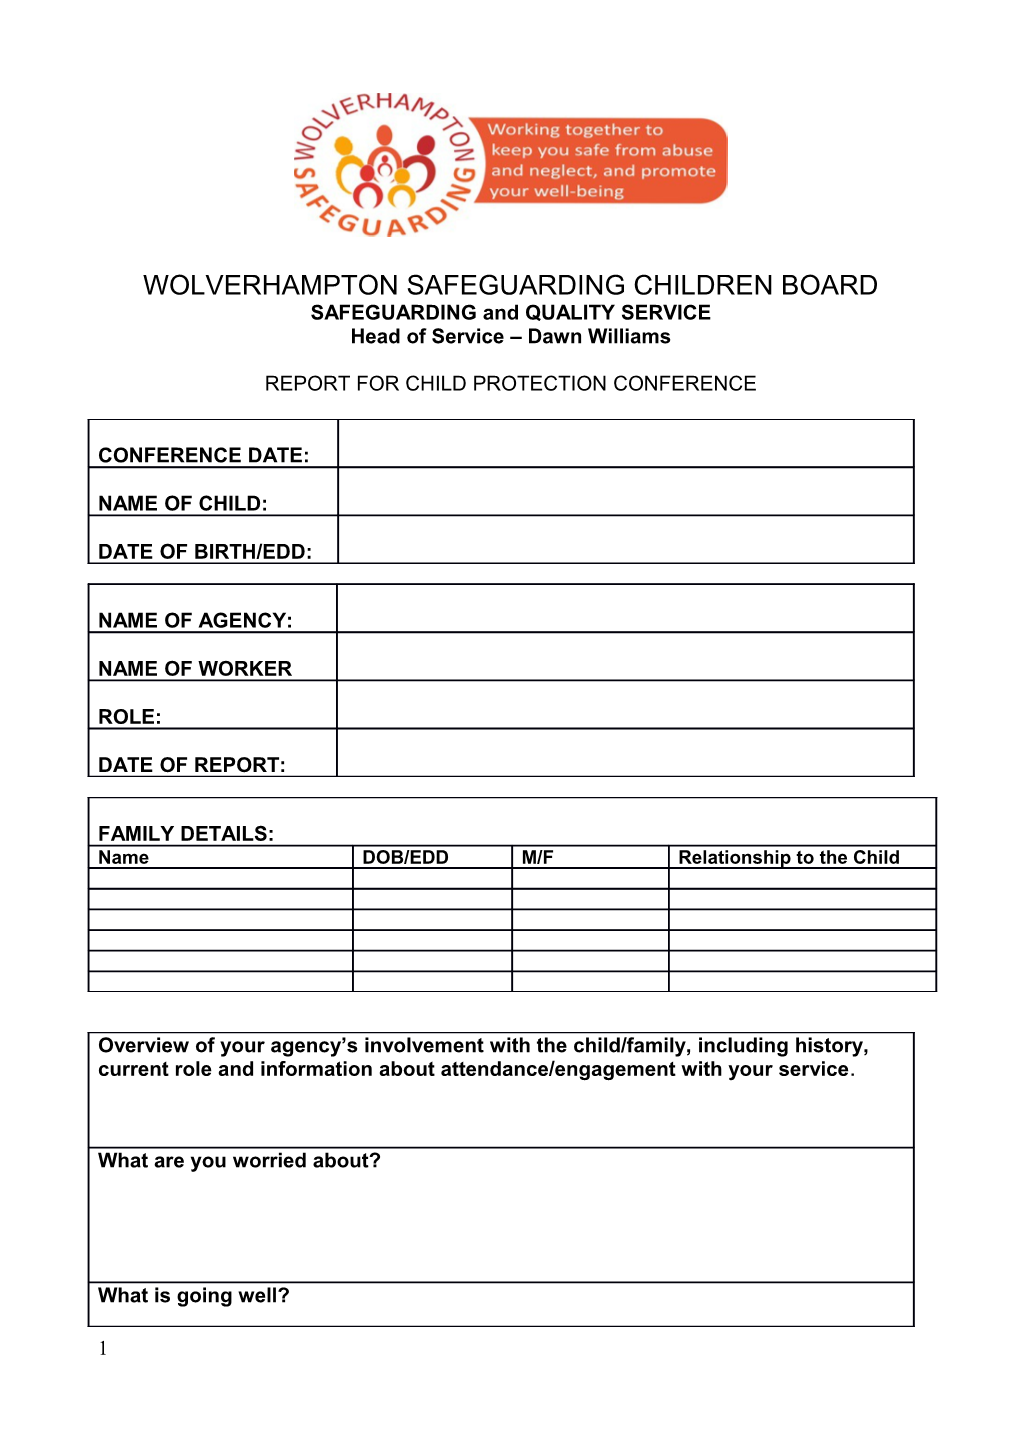 Wolverhampton Safeguarding Children Board